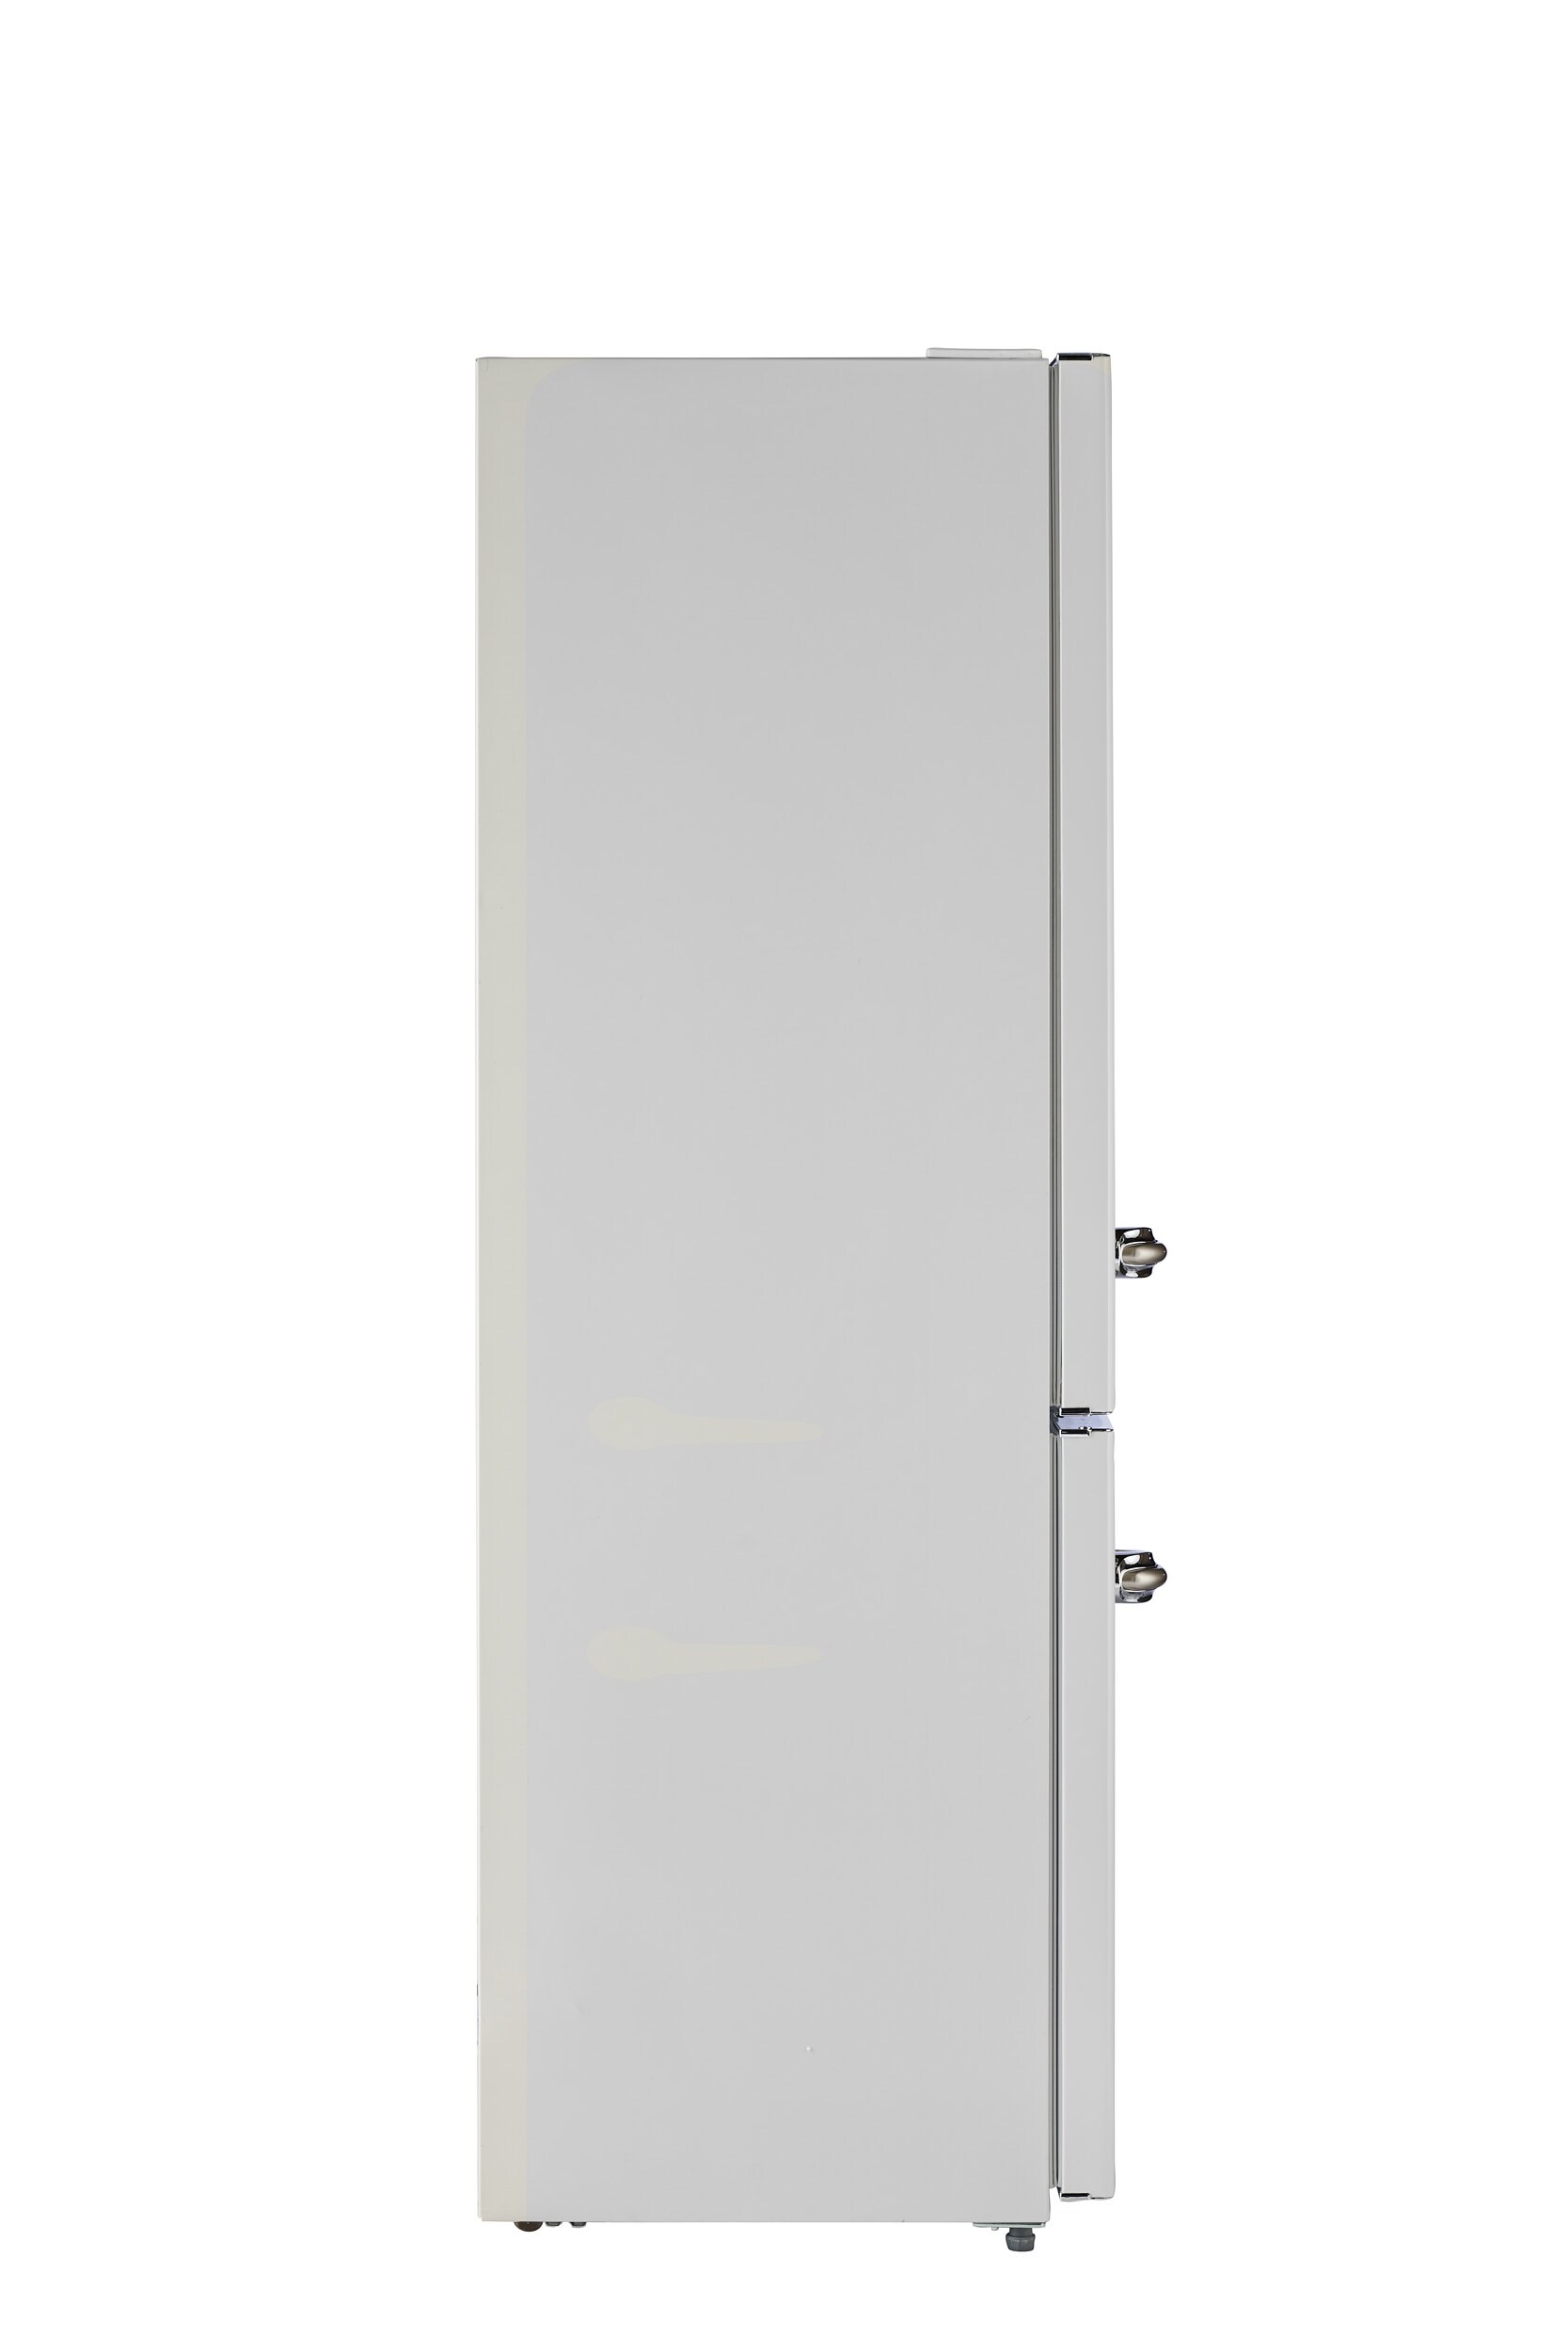 iio Retro-Mod RM1 11-cu ft Bottom-Freezer Refrigerator (Wine Red) ENERGY  STAR in the Bottom-Freezer Refrigerators department at